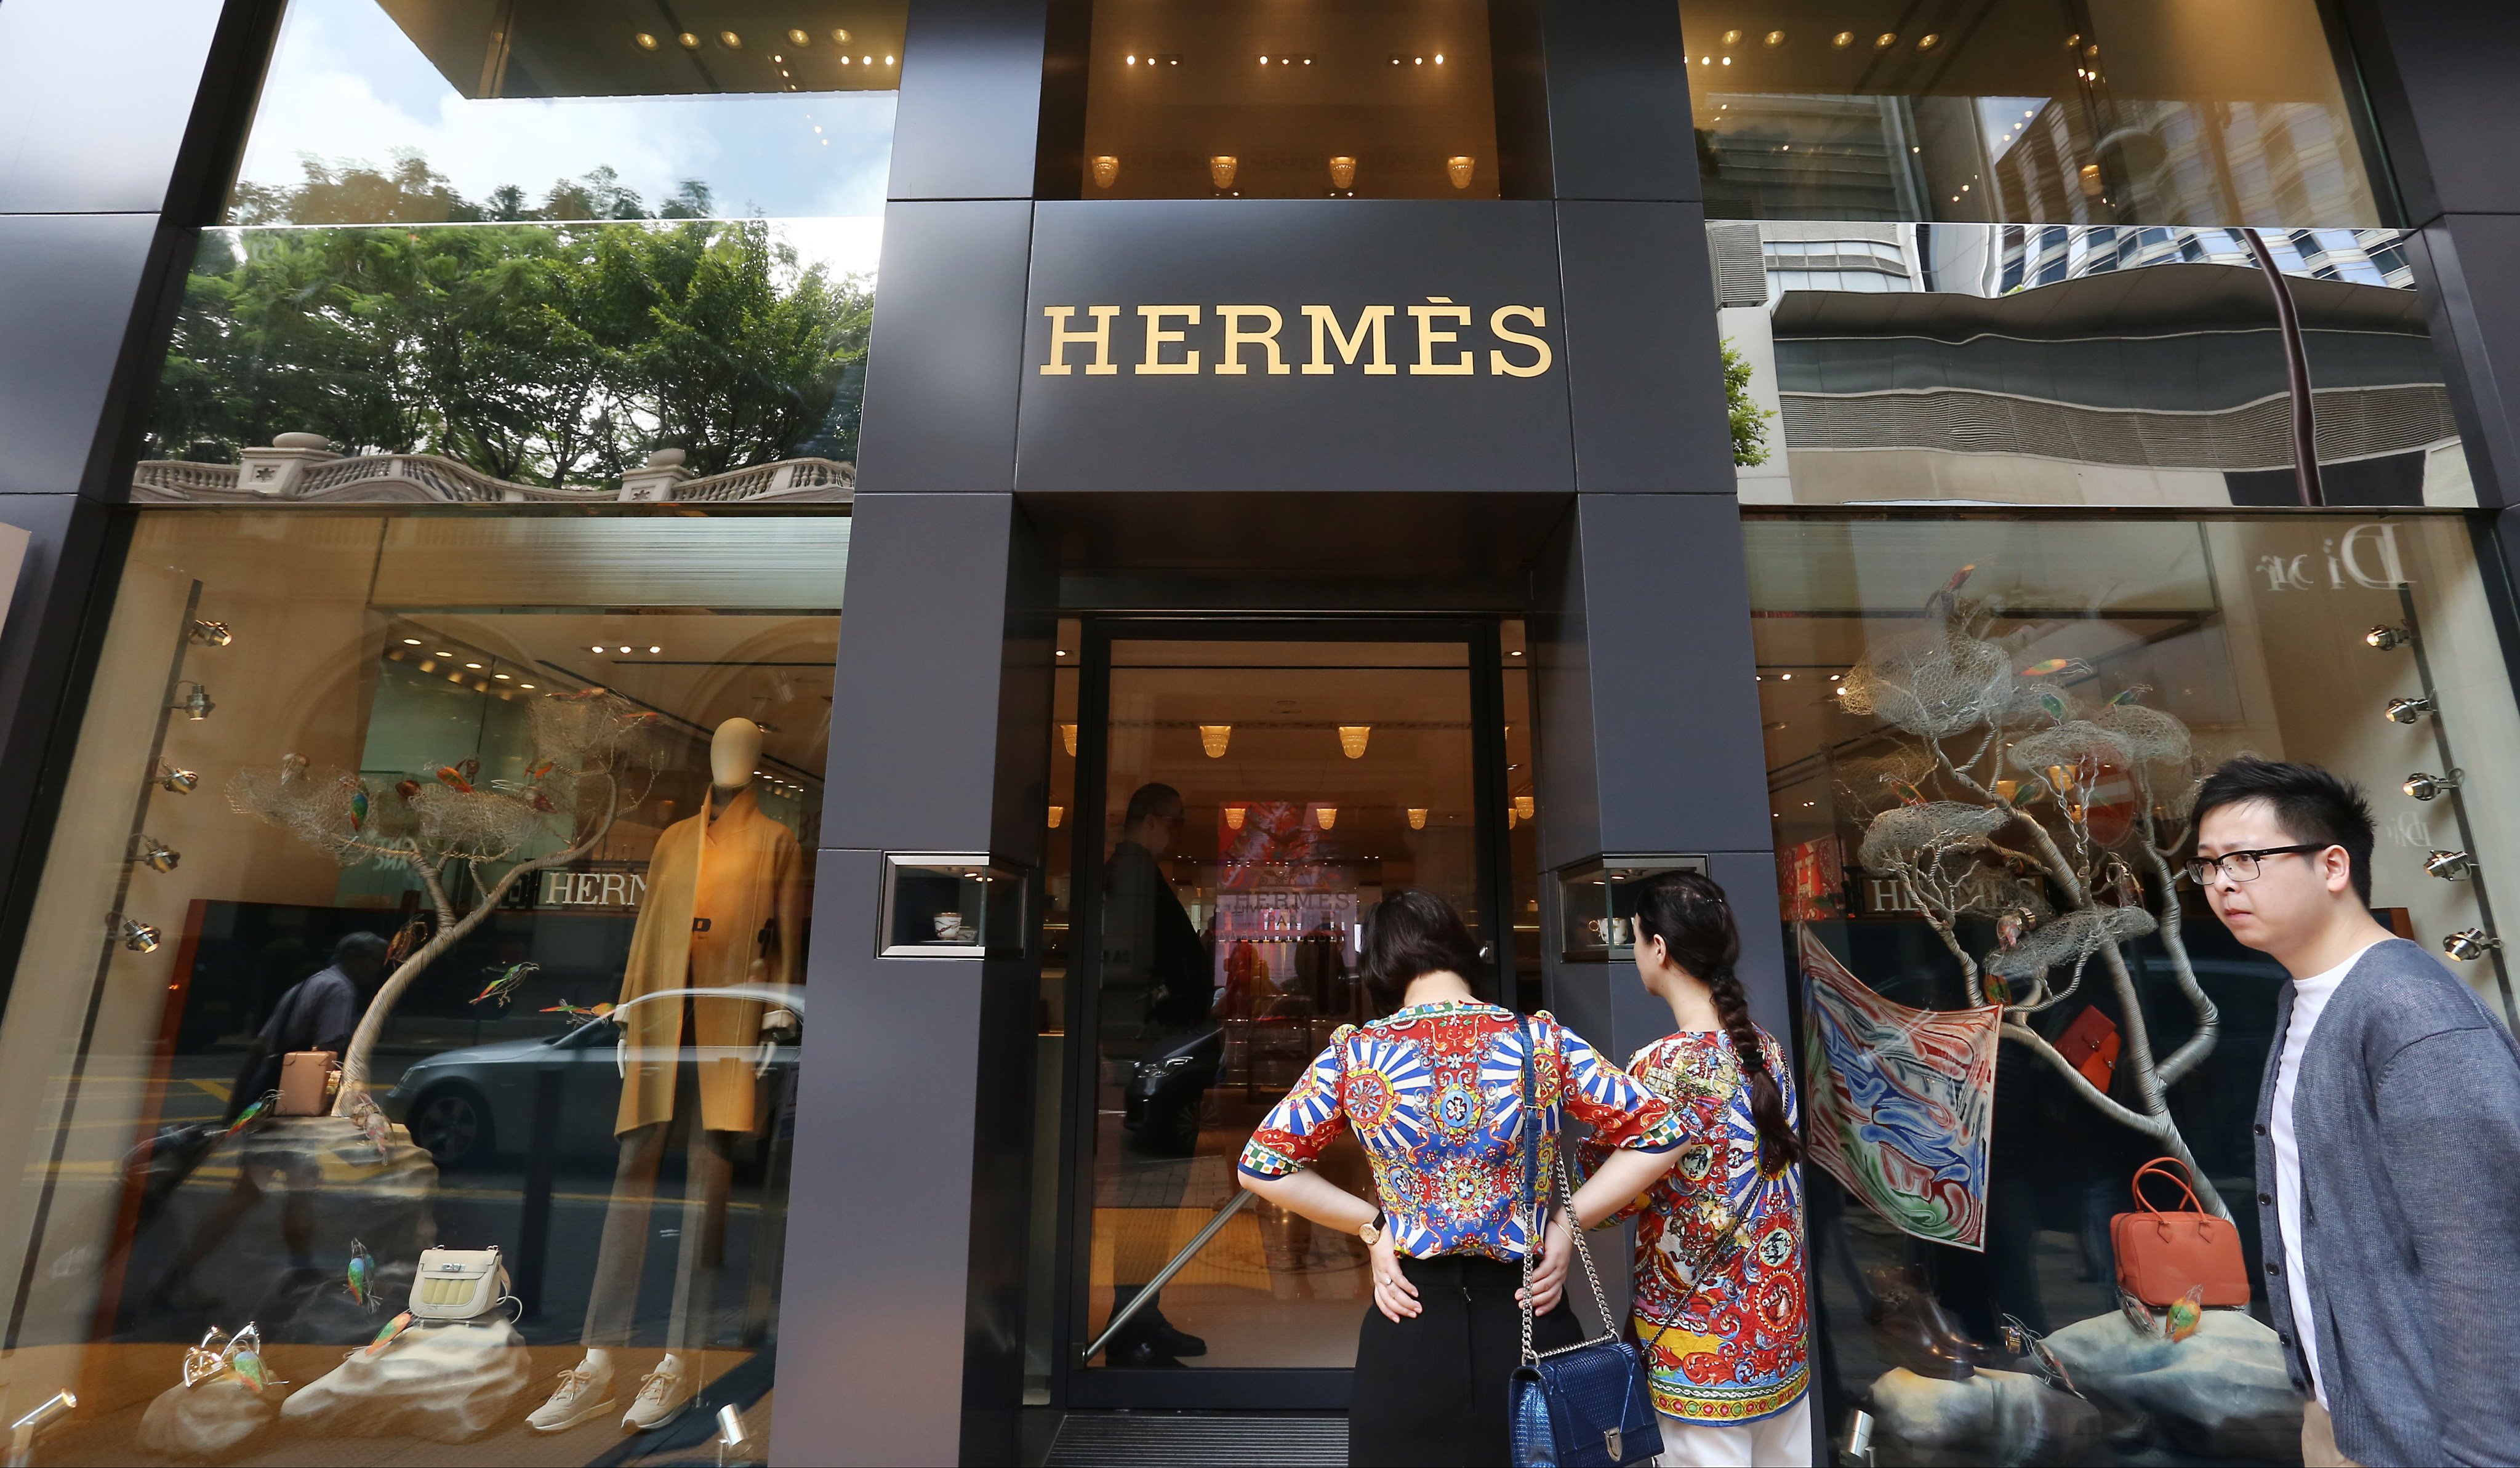 Tourists are seen at an Hermès store in a shopping area of Tsim Sha Tsui, Hong Kong. Photo: Jonathan Wong